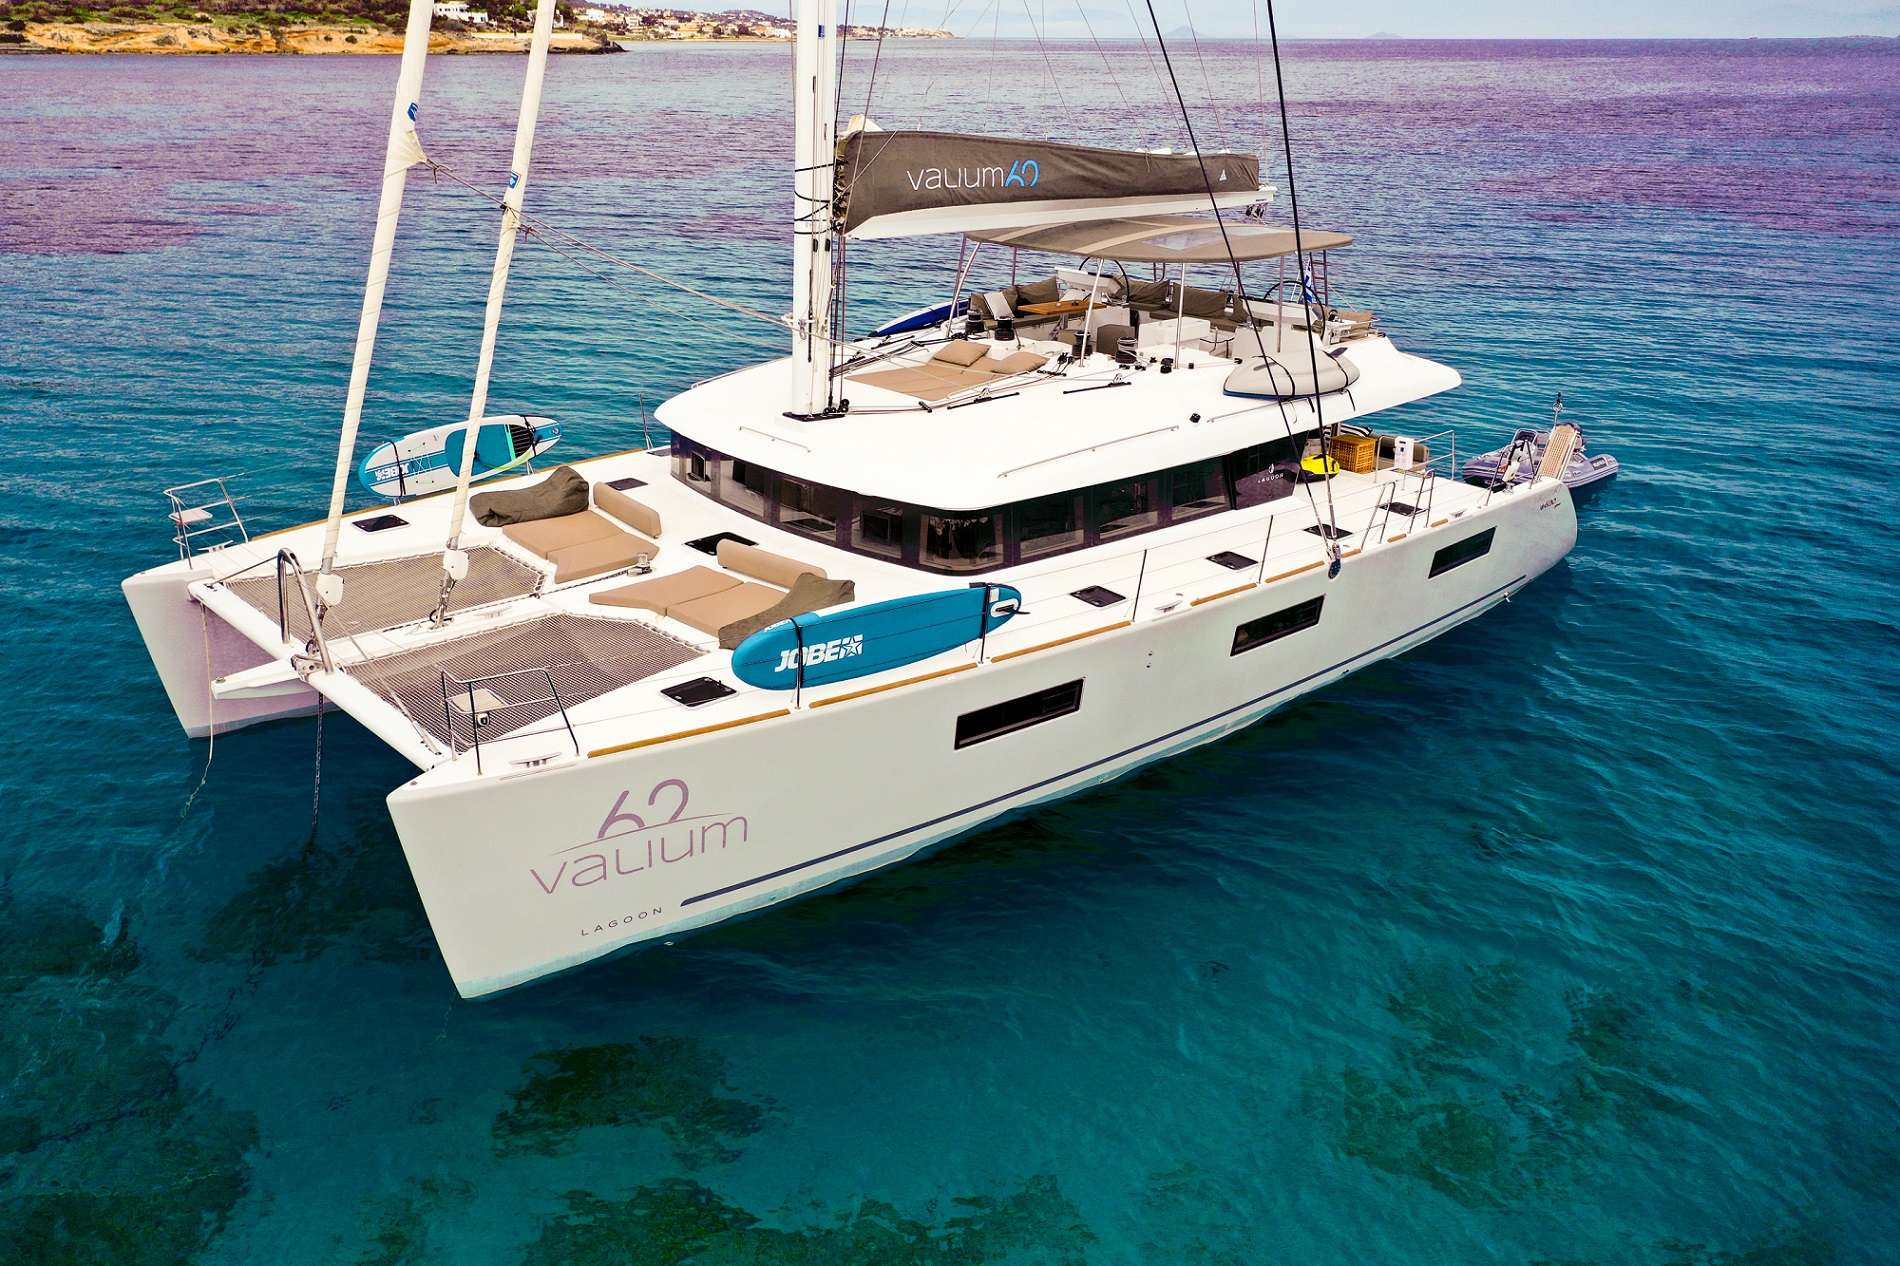 valium62 - Yacht Charter Skopelos & Boat hire in Greece 2